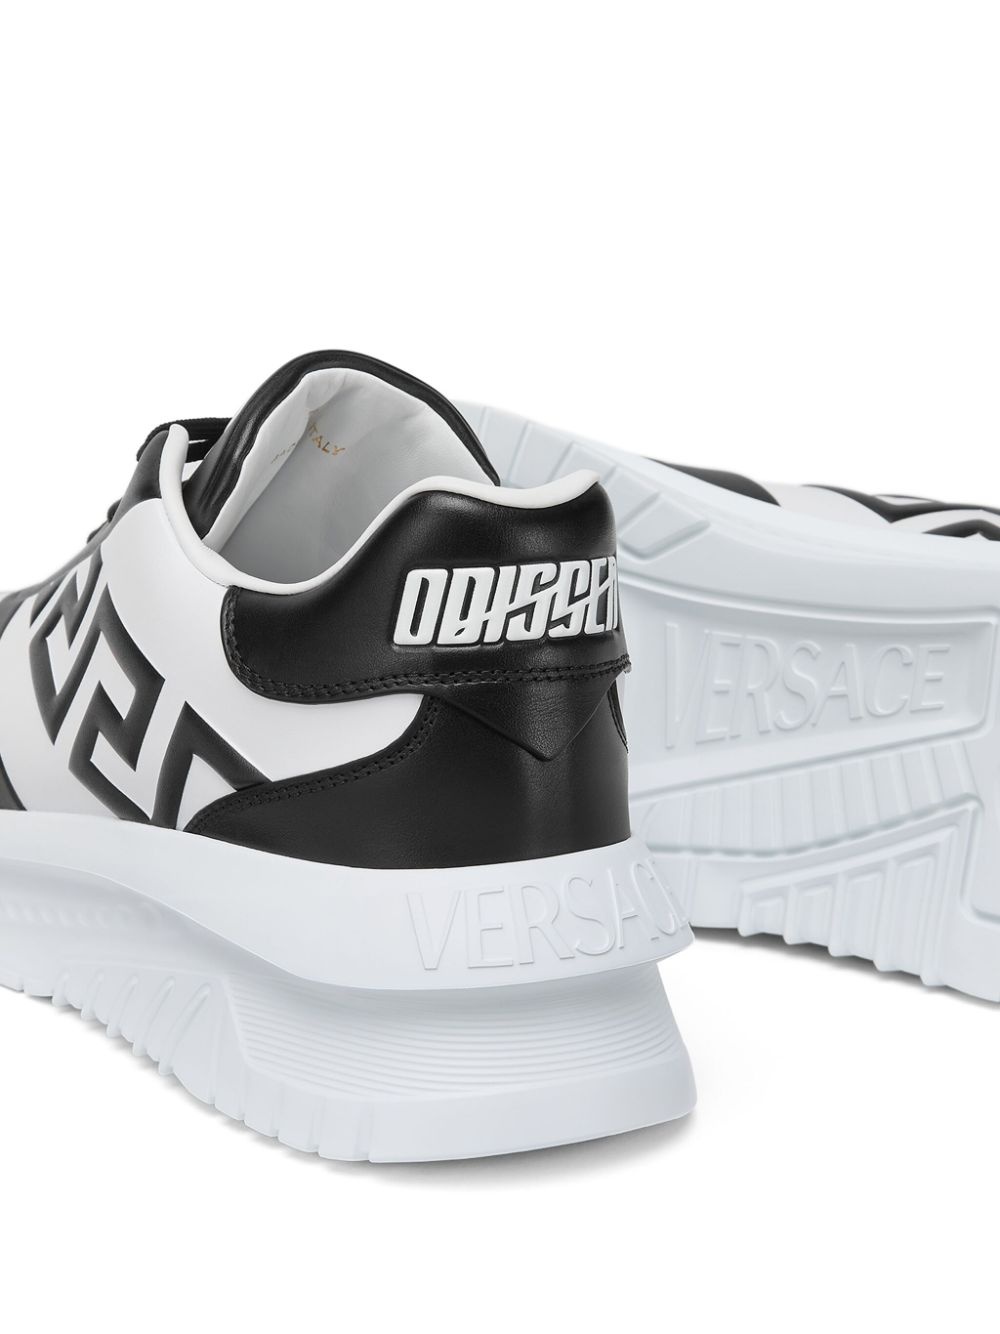 Greca Odissea sneakers - 3